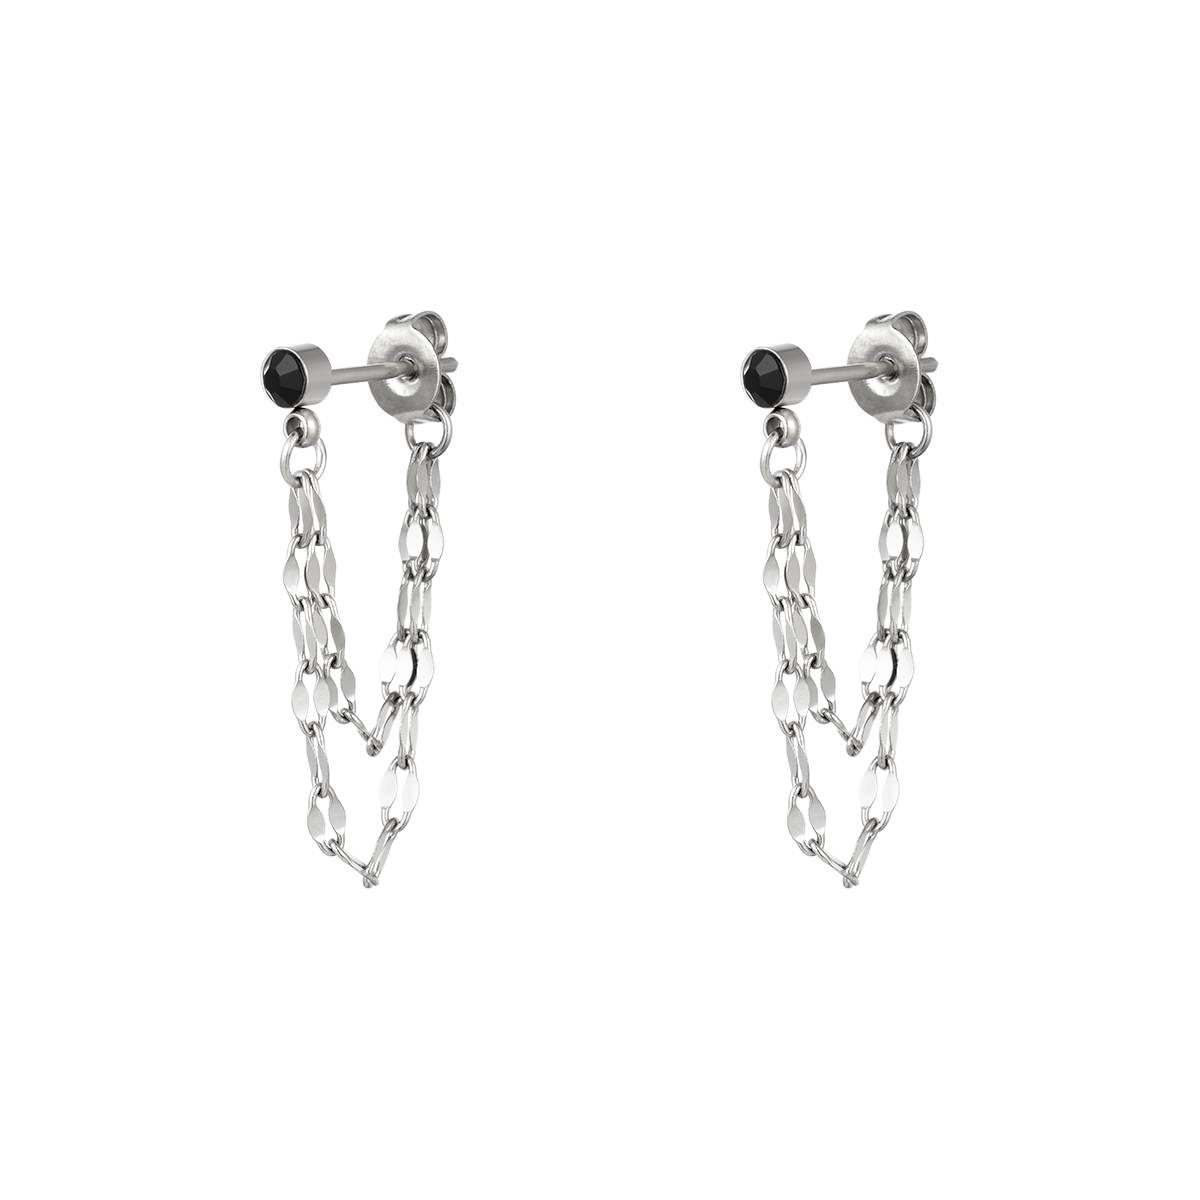 Black stone chain earrings